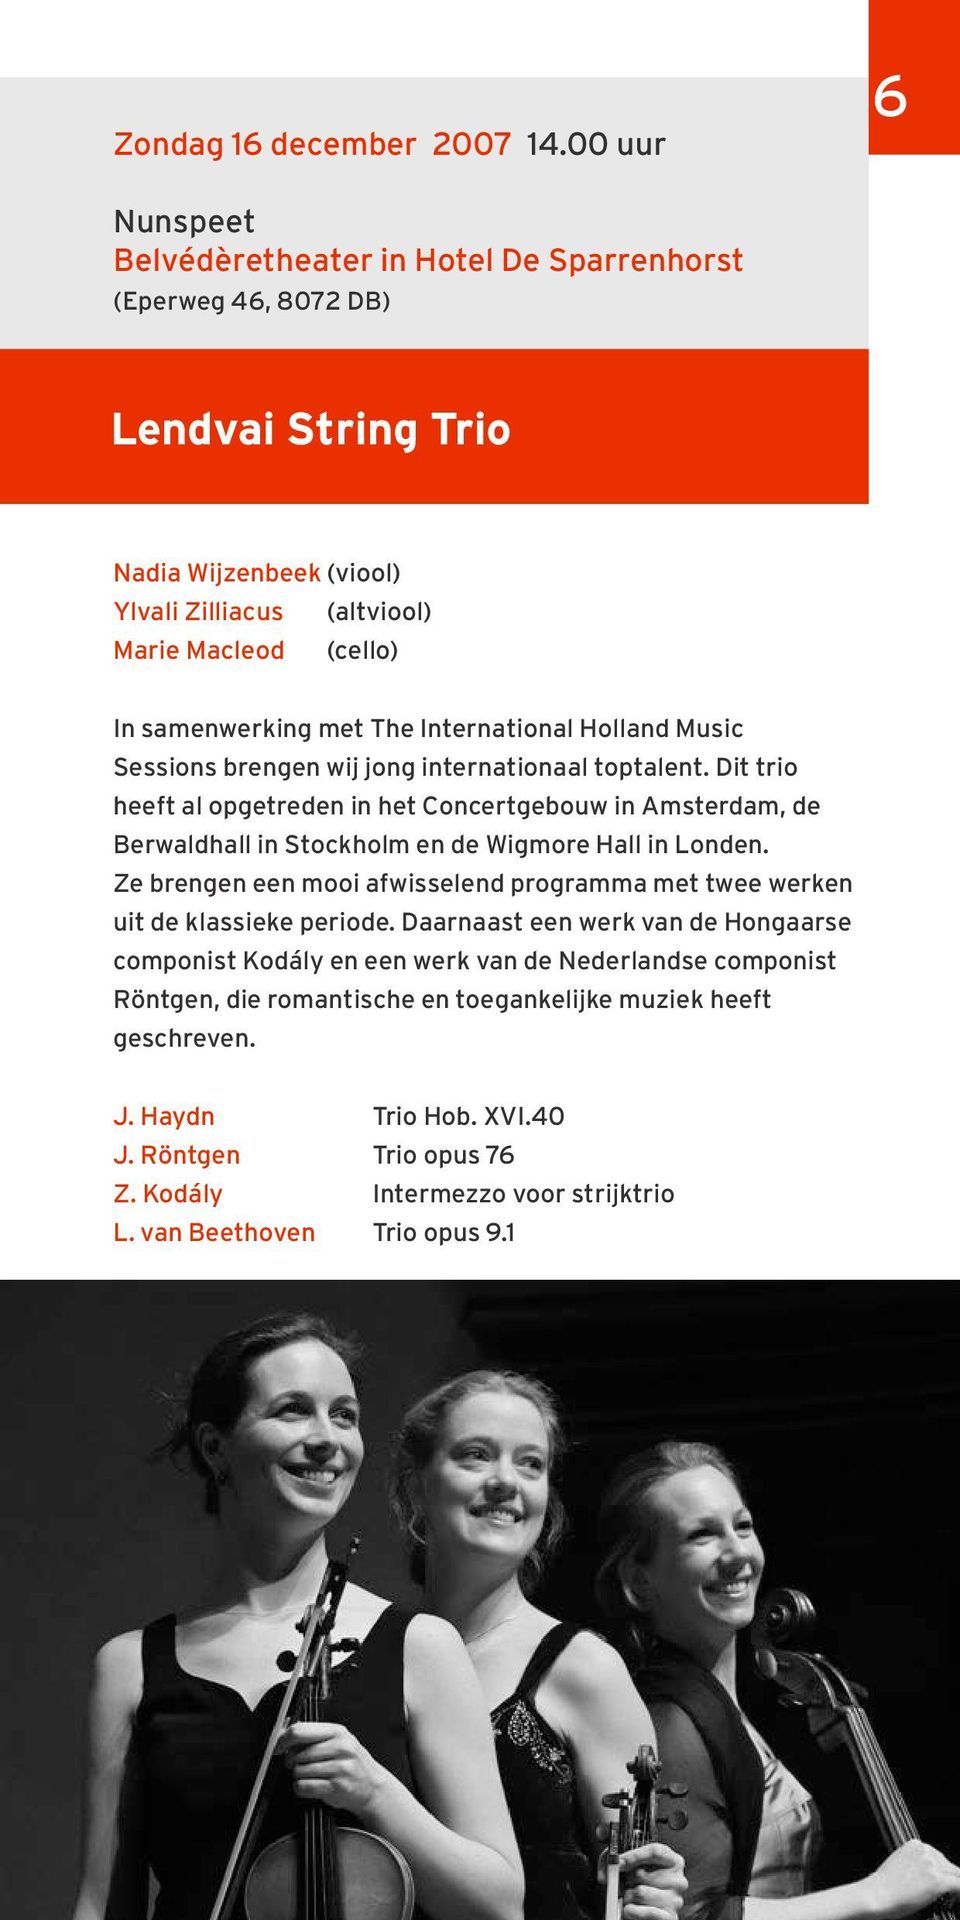 The International Holland Music Sessions brengen wij jong internationaal toptalent.